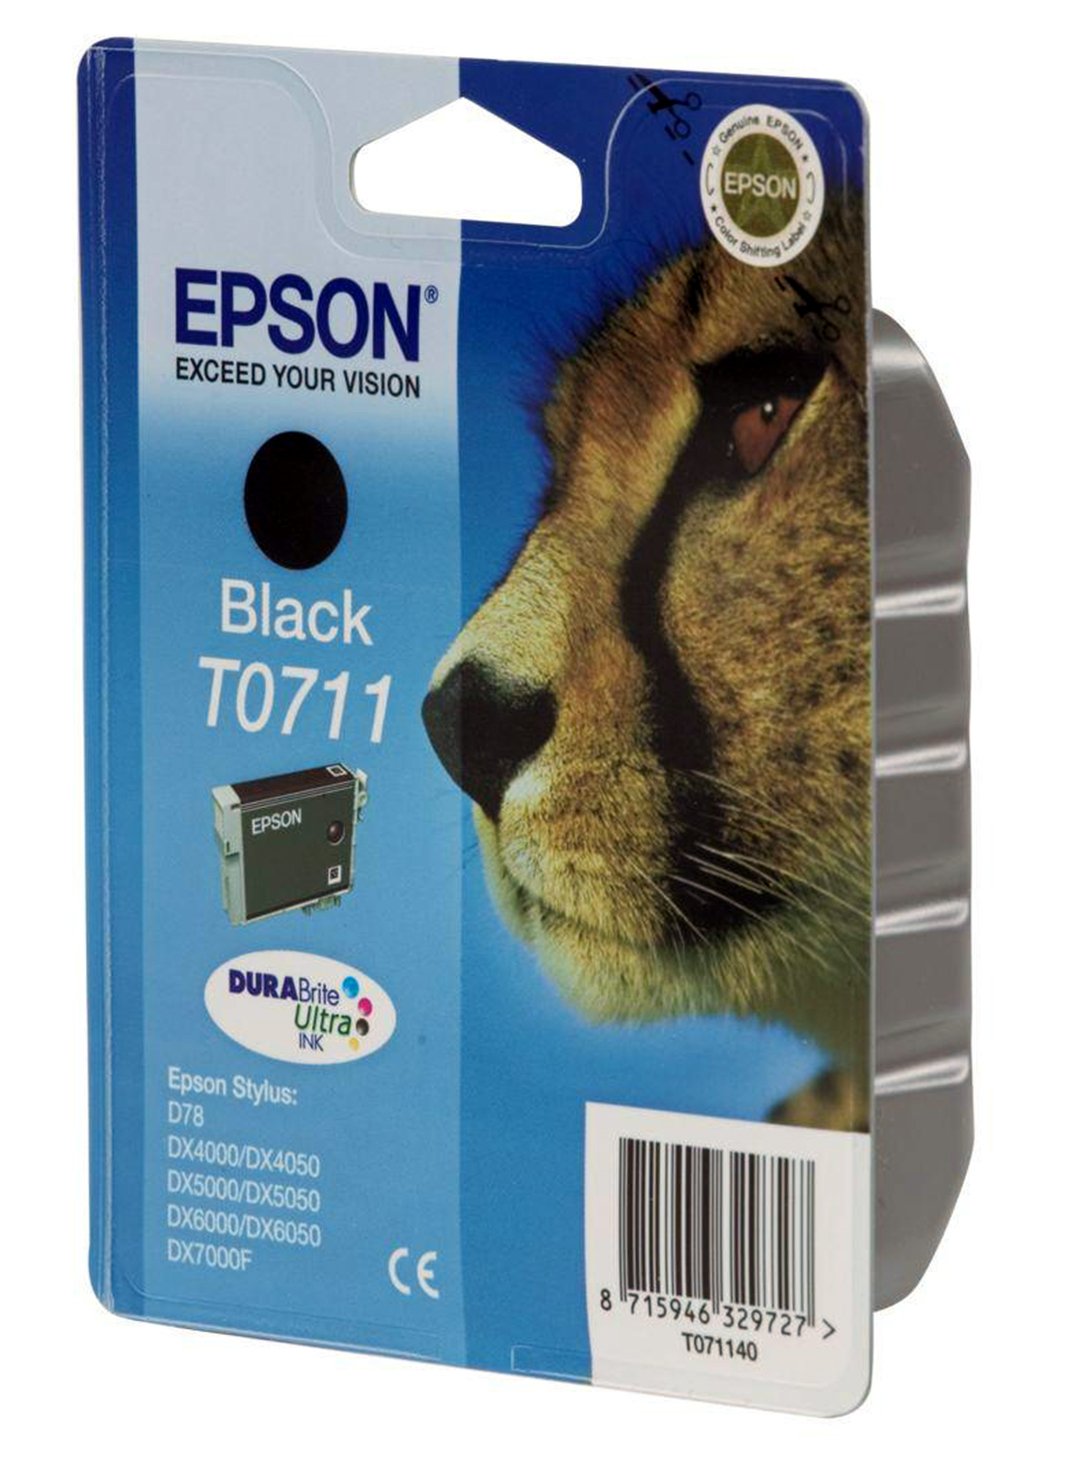 Epson T0711 Cheetah Ink Cartridge Review